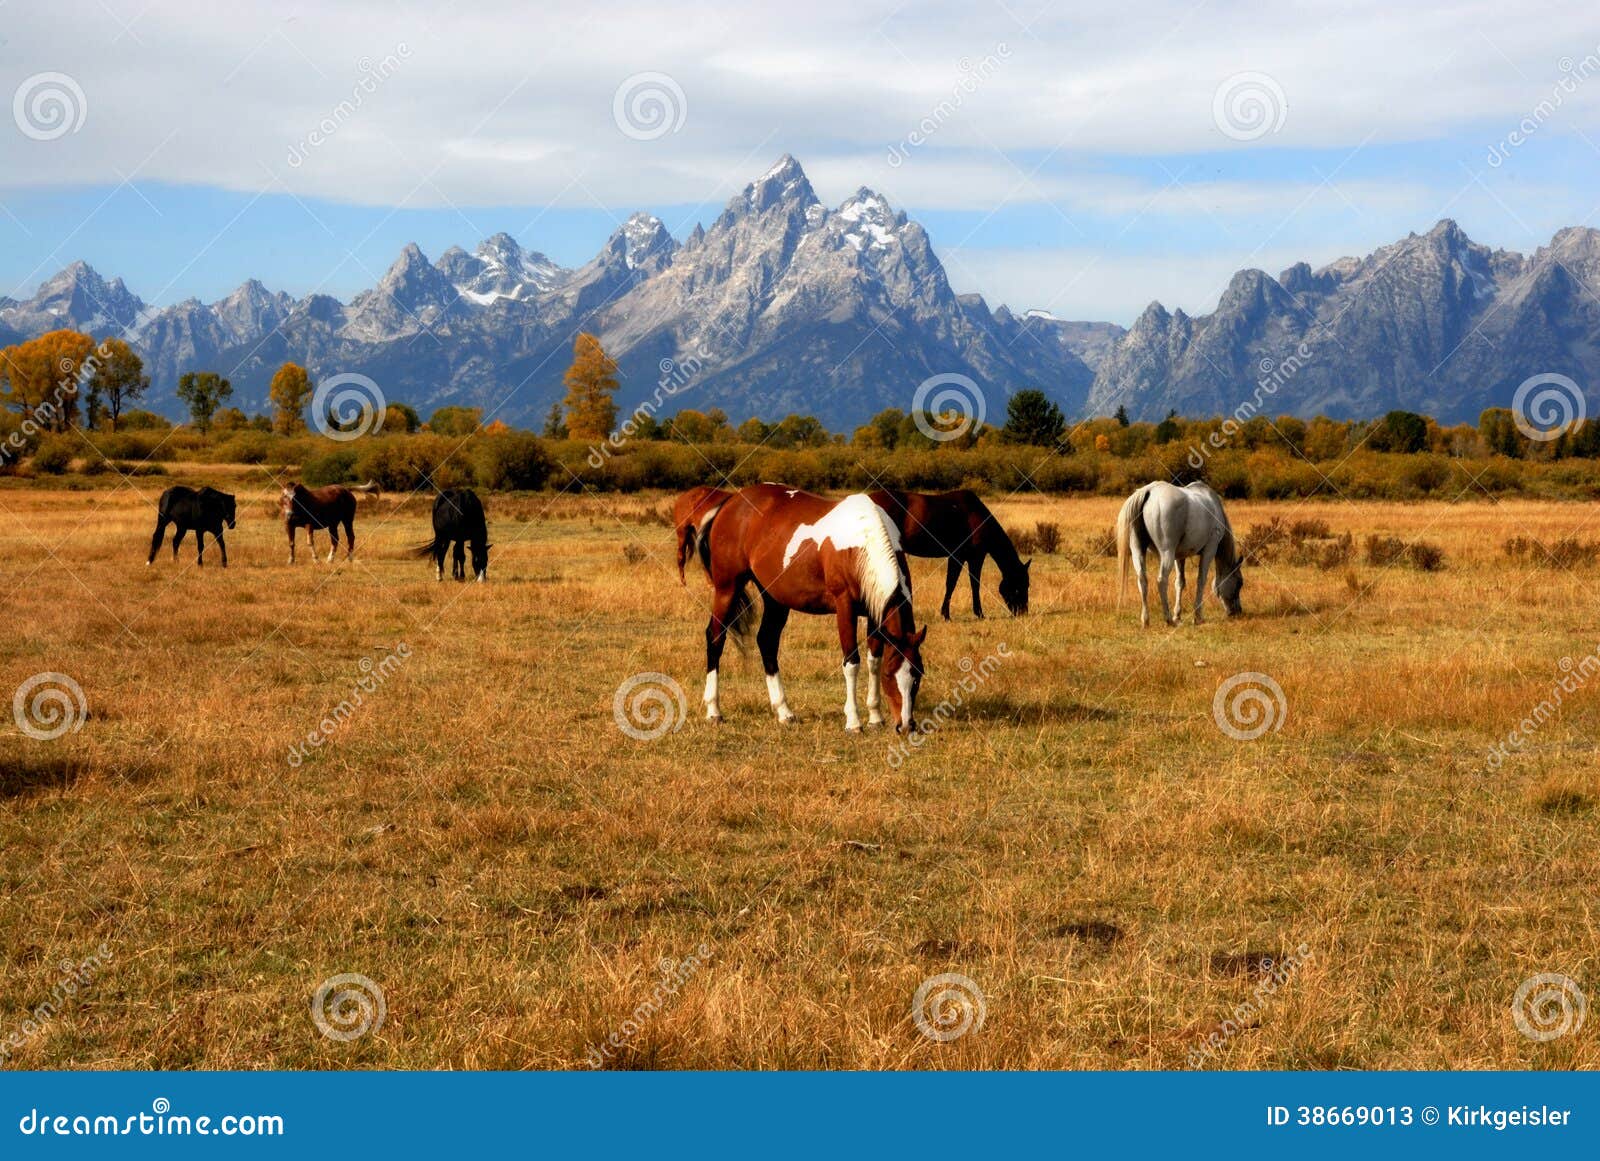 grand teton horse ranch